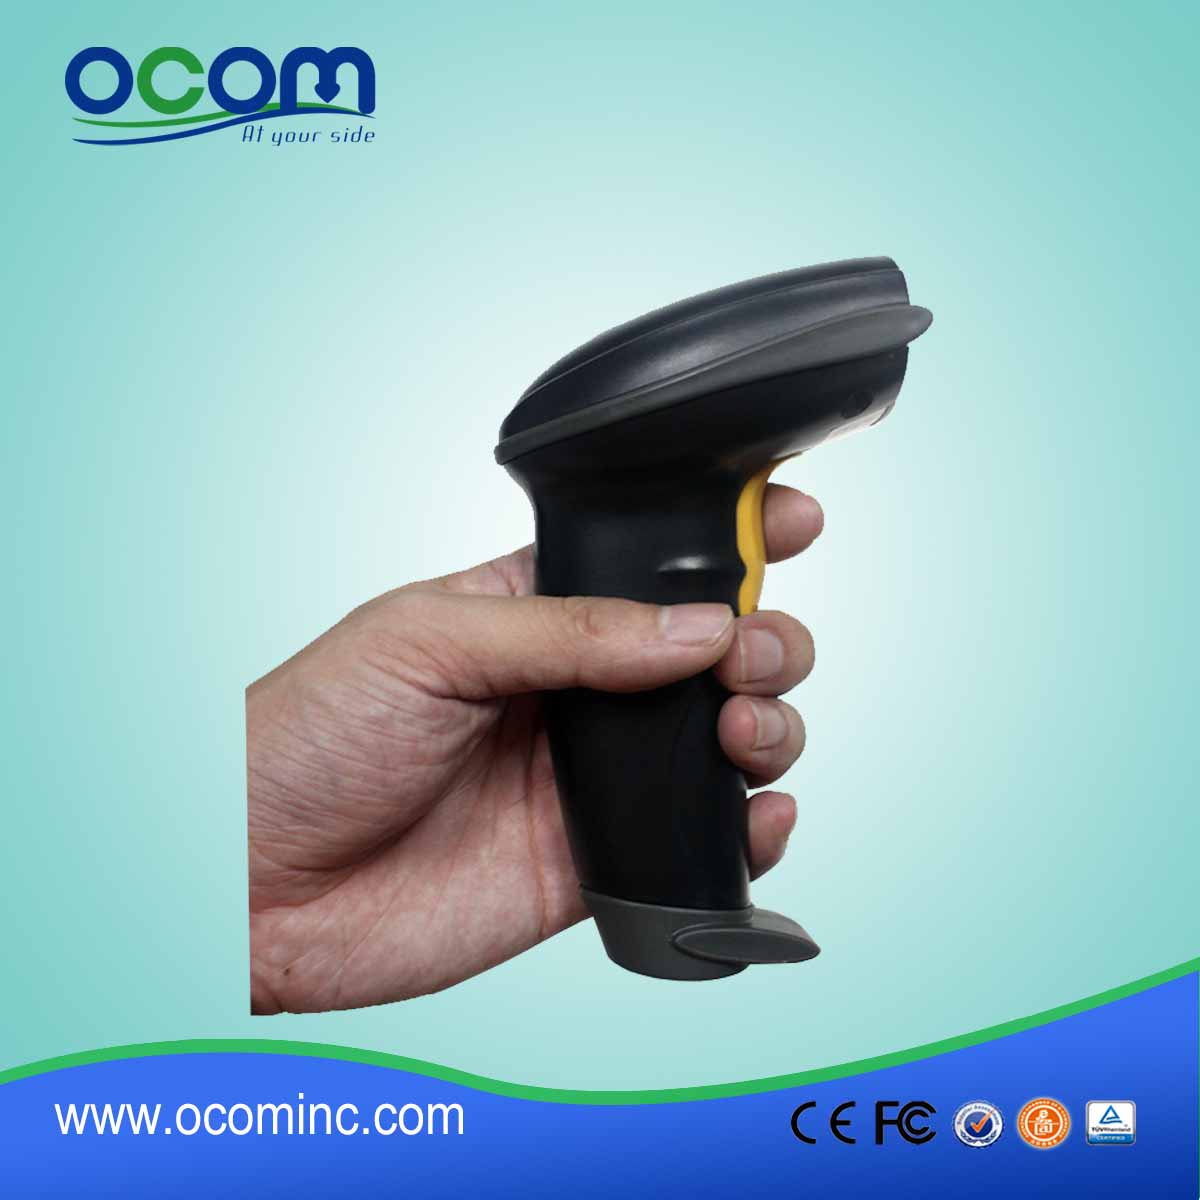 OCBS-W011 Wireless Handy Mini Bluetooth Barcode Scanner